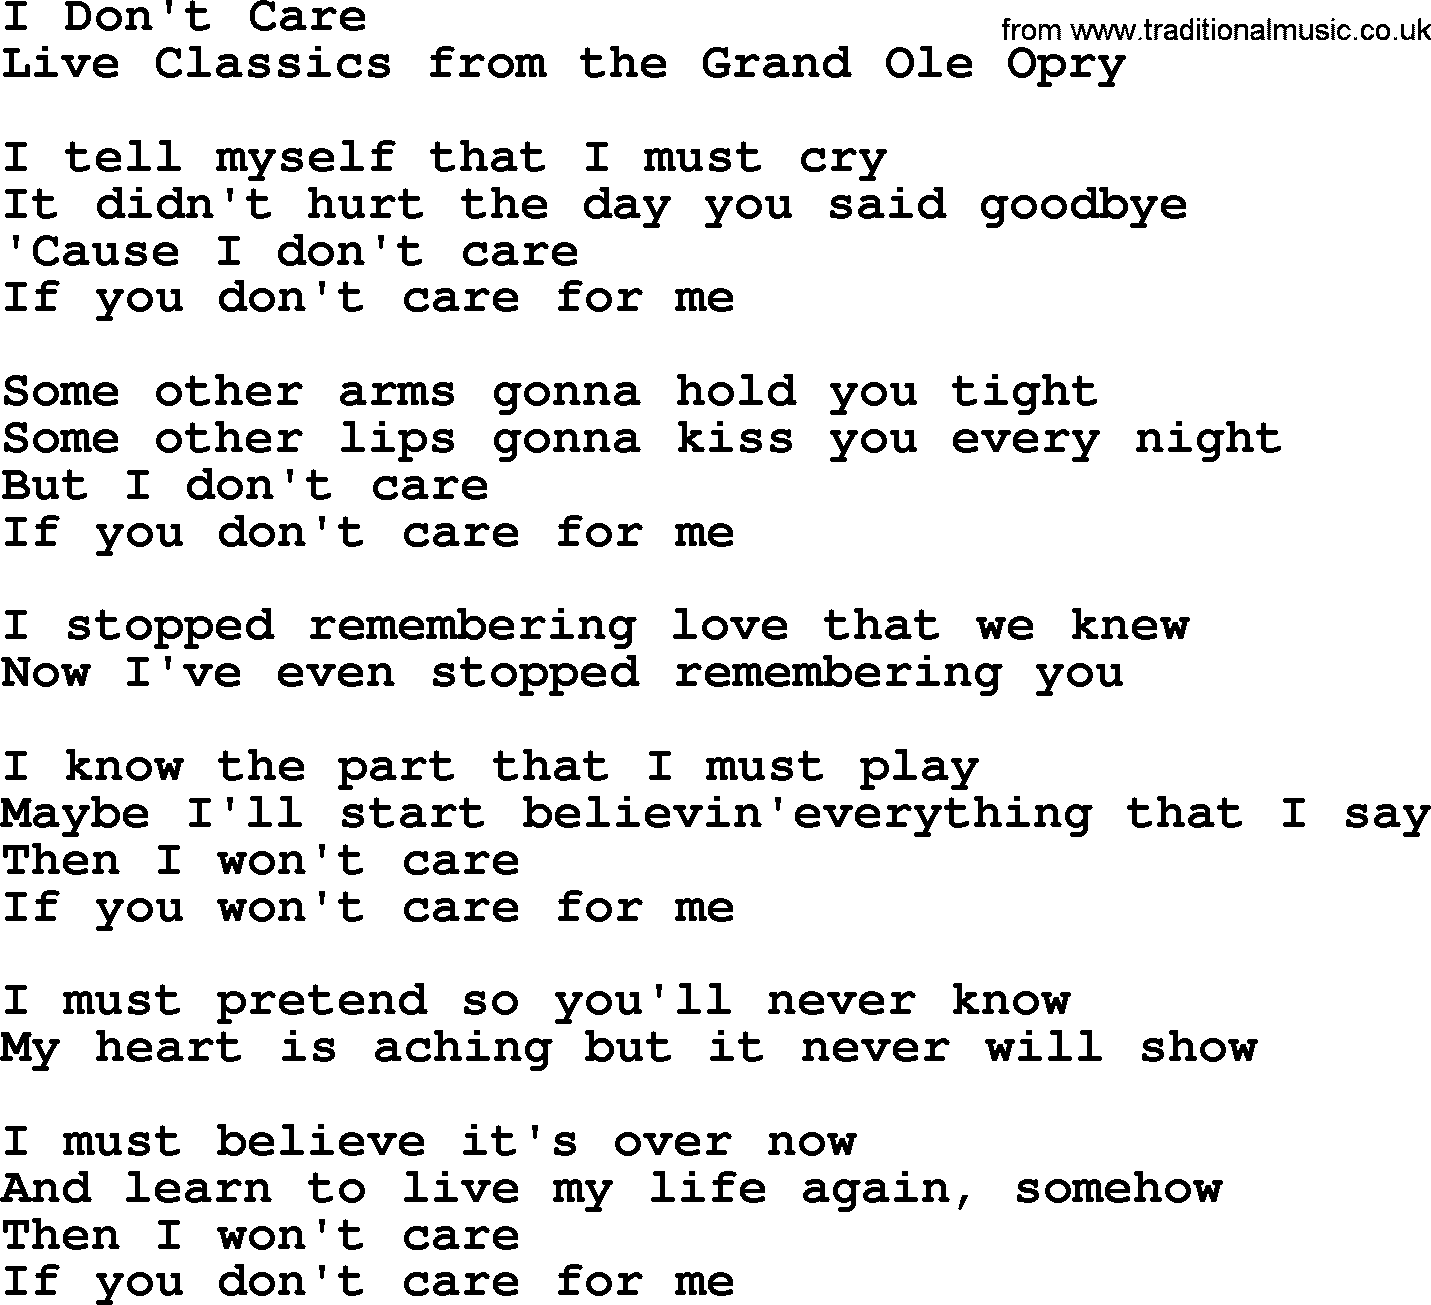 Marty Robbins song: I Don't Care, lyrics